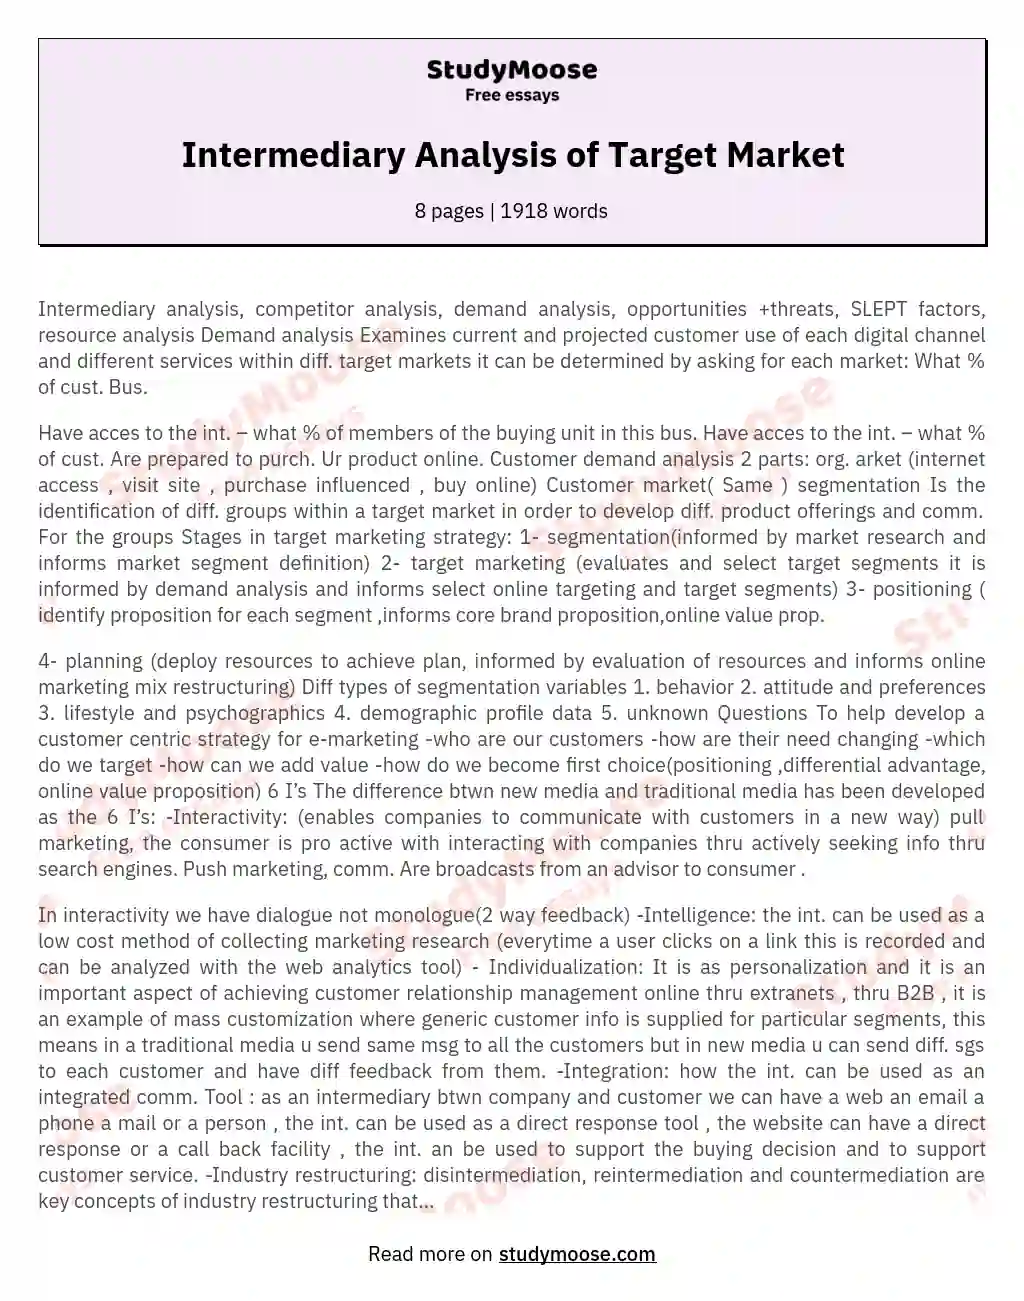 Intermediary Analysis of Target Market